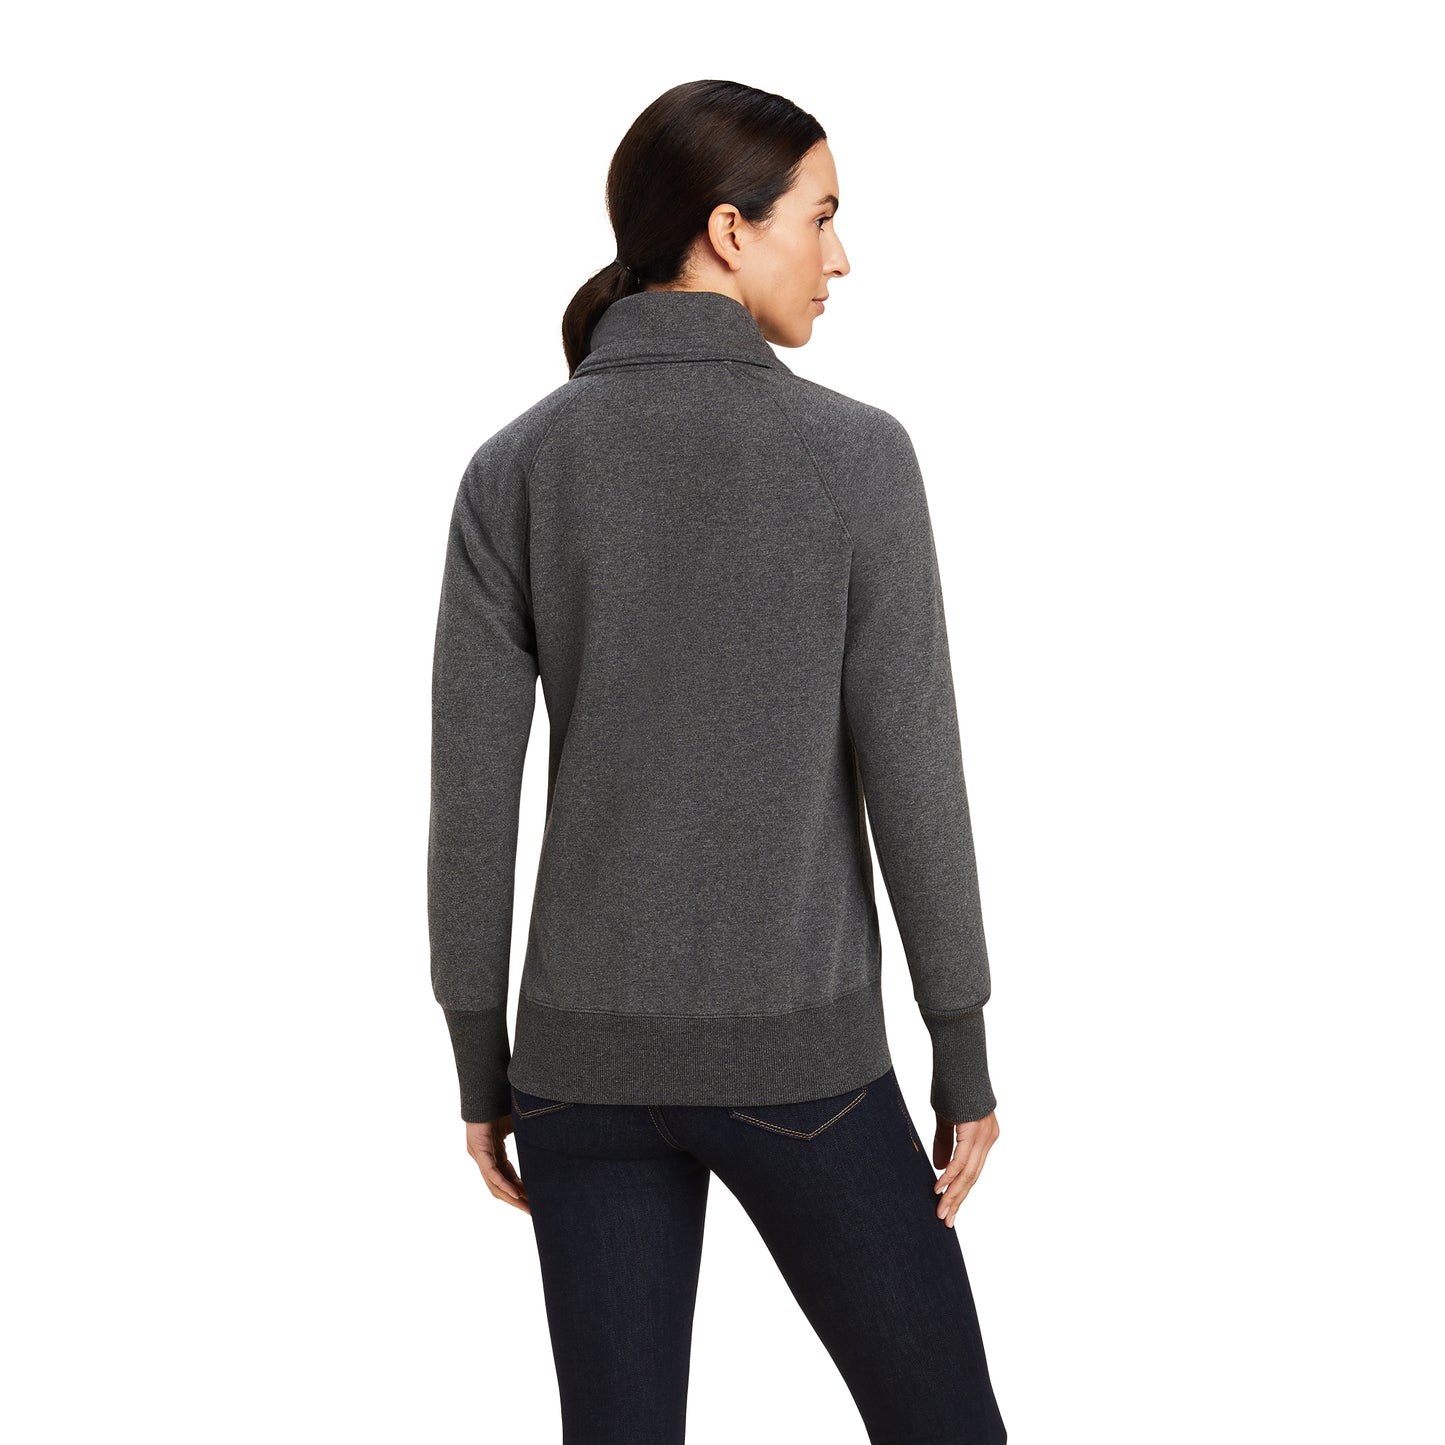 Ariat Ladies Team Logo Full Zip Charcoal Grey Sweatshirt 10041227